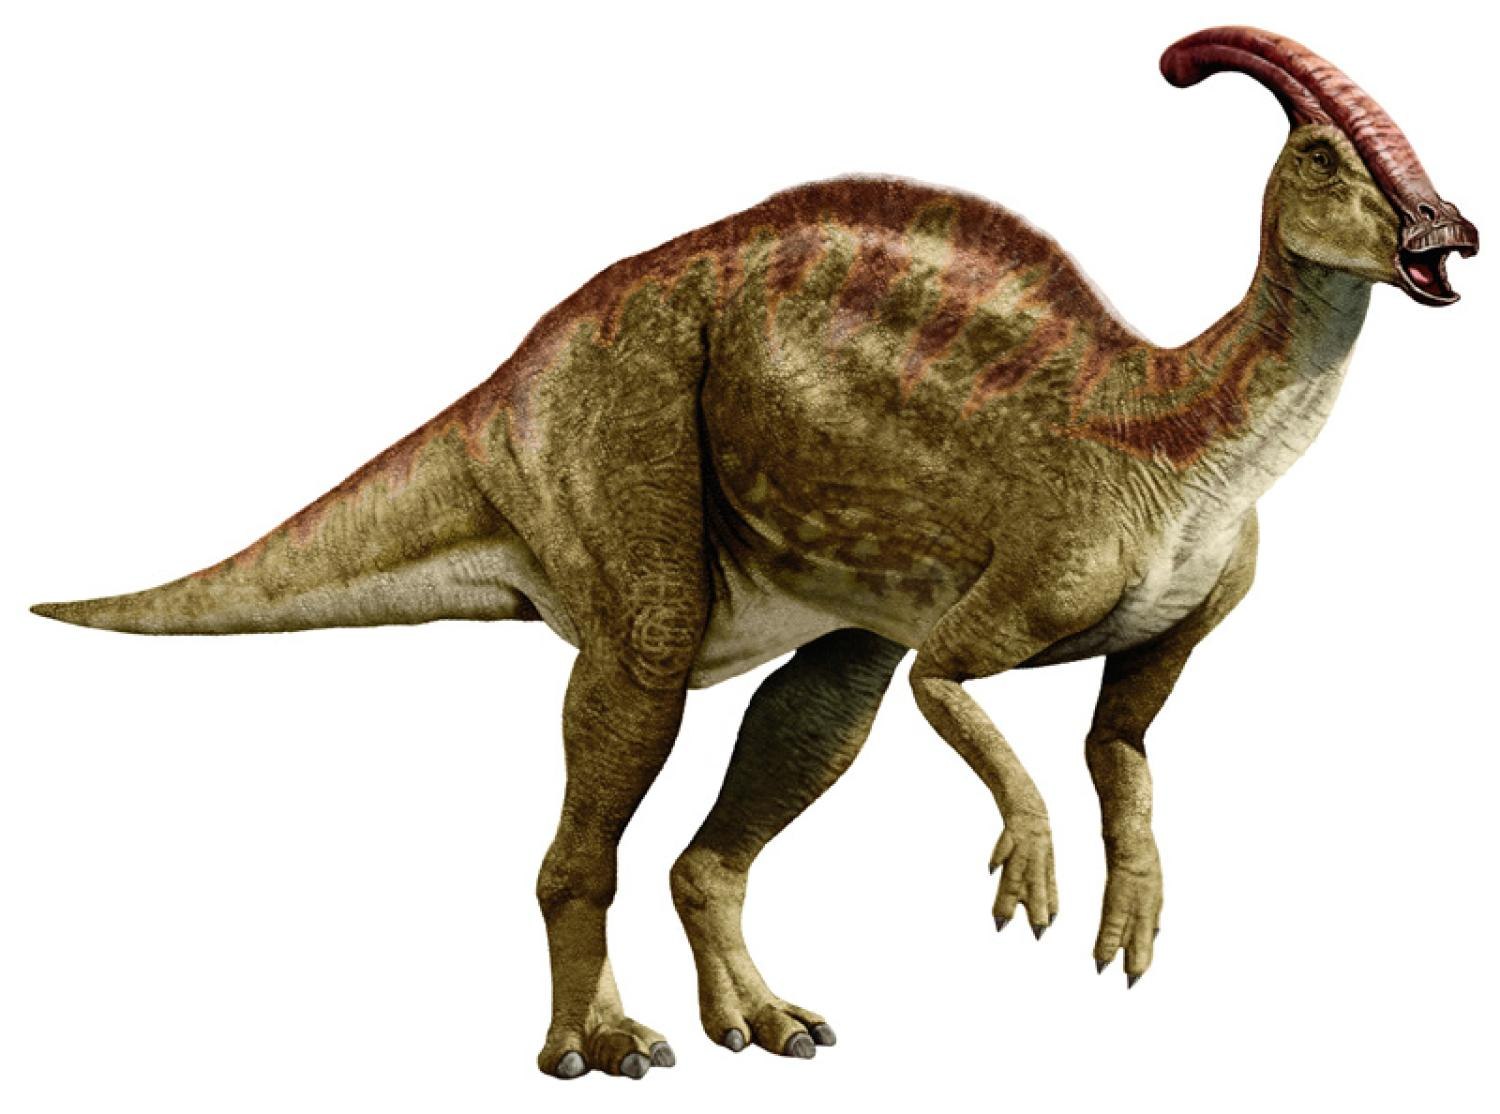 Динозавр с рогом на голове